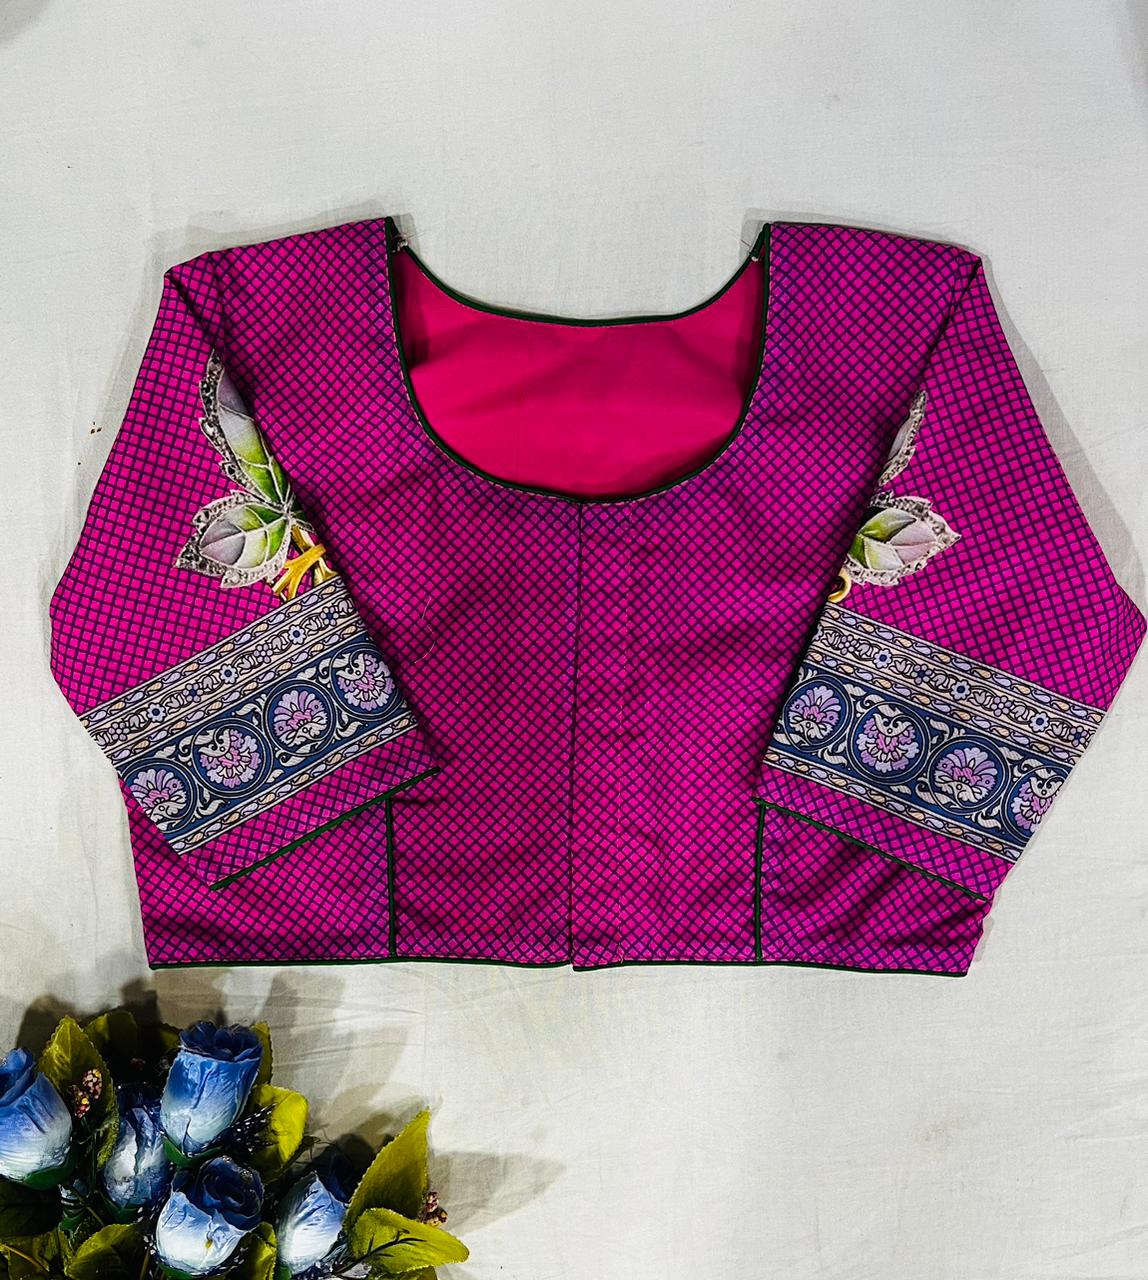 Cotton printed boutique style blouse